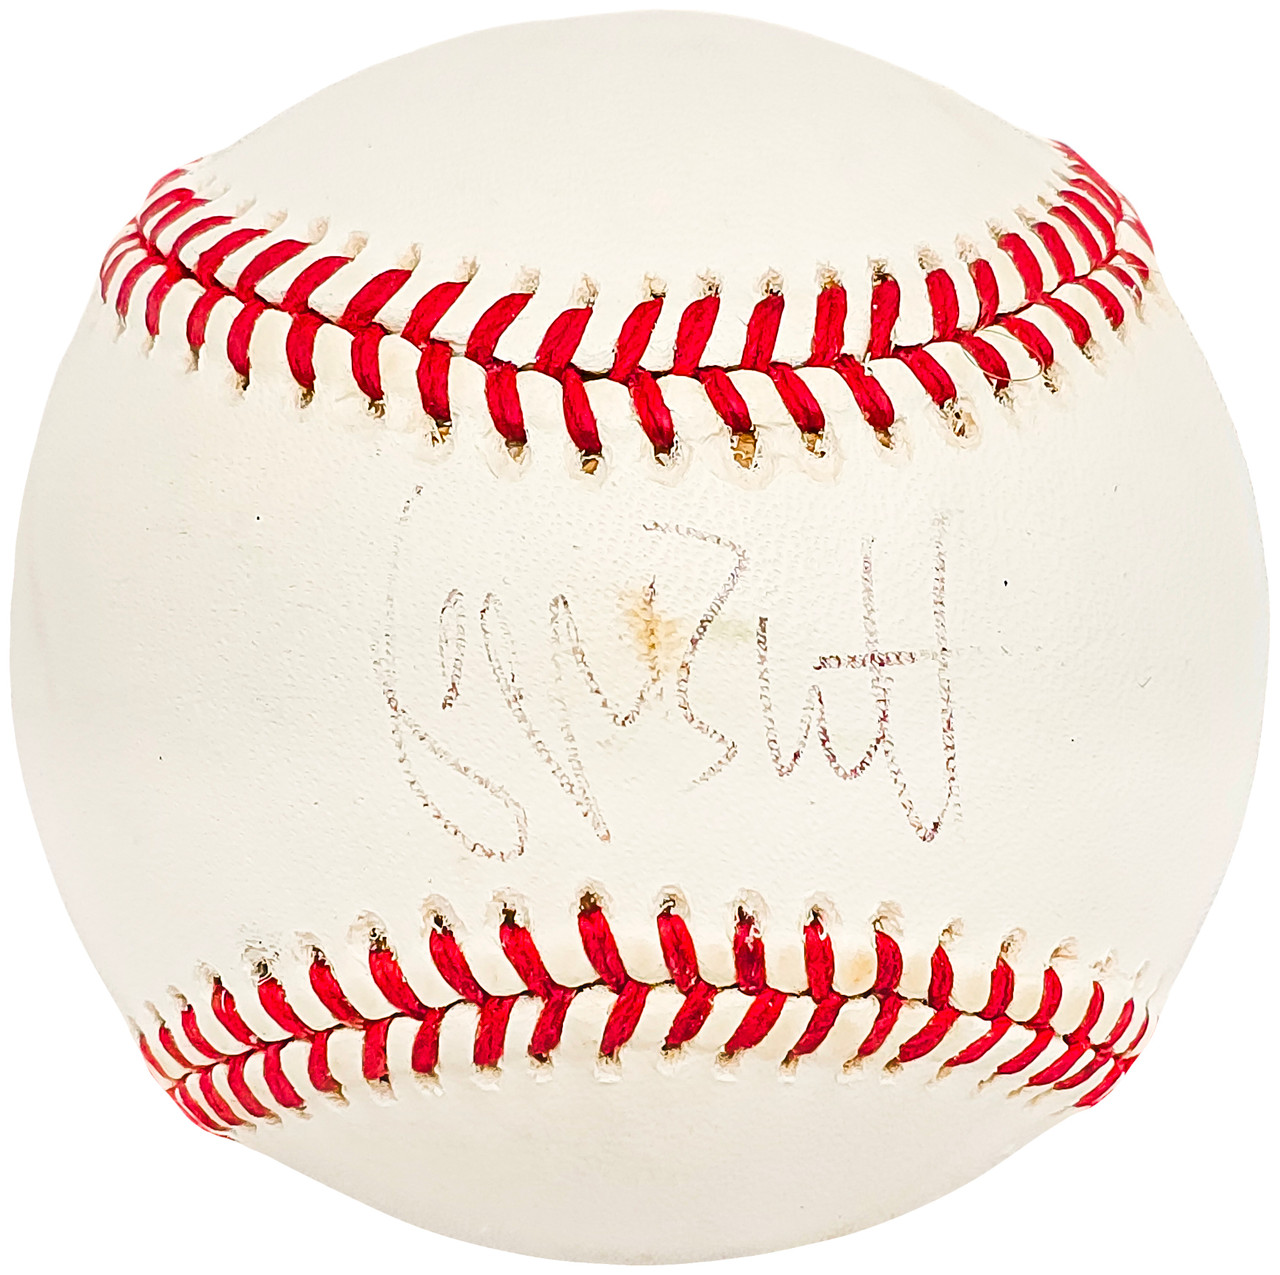 George Brett  George brett, Royals baseball, Kc royals